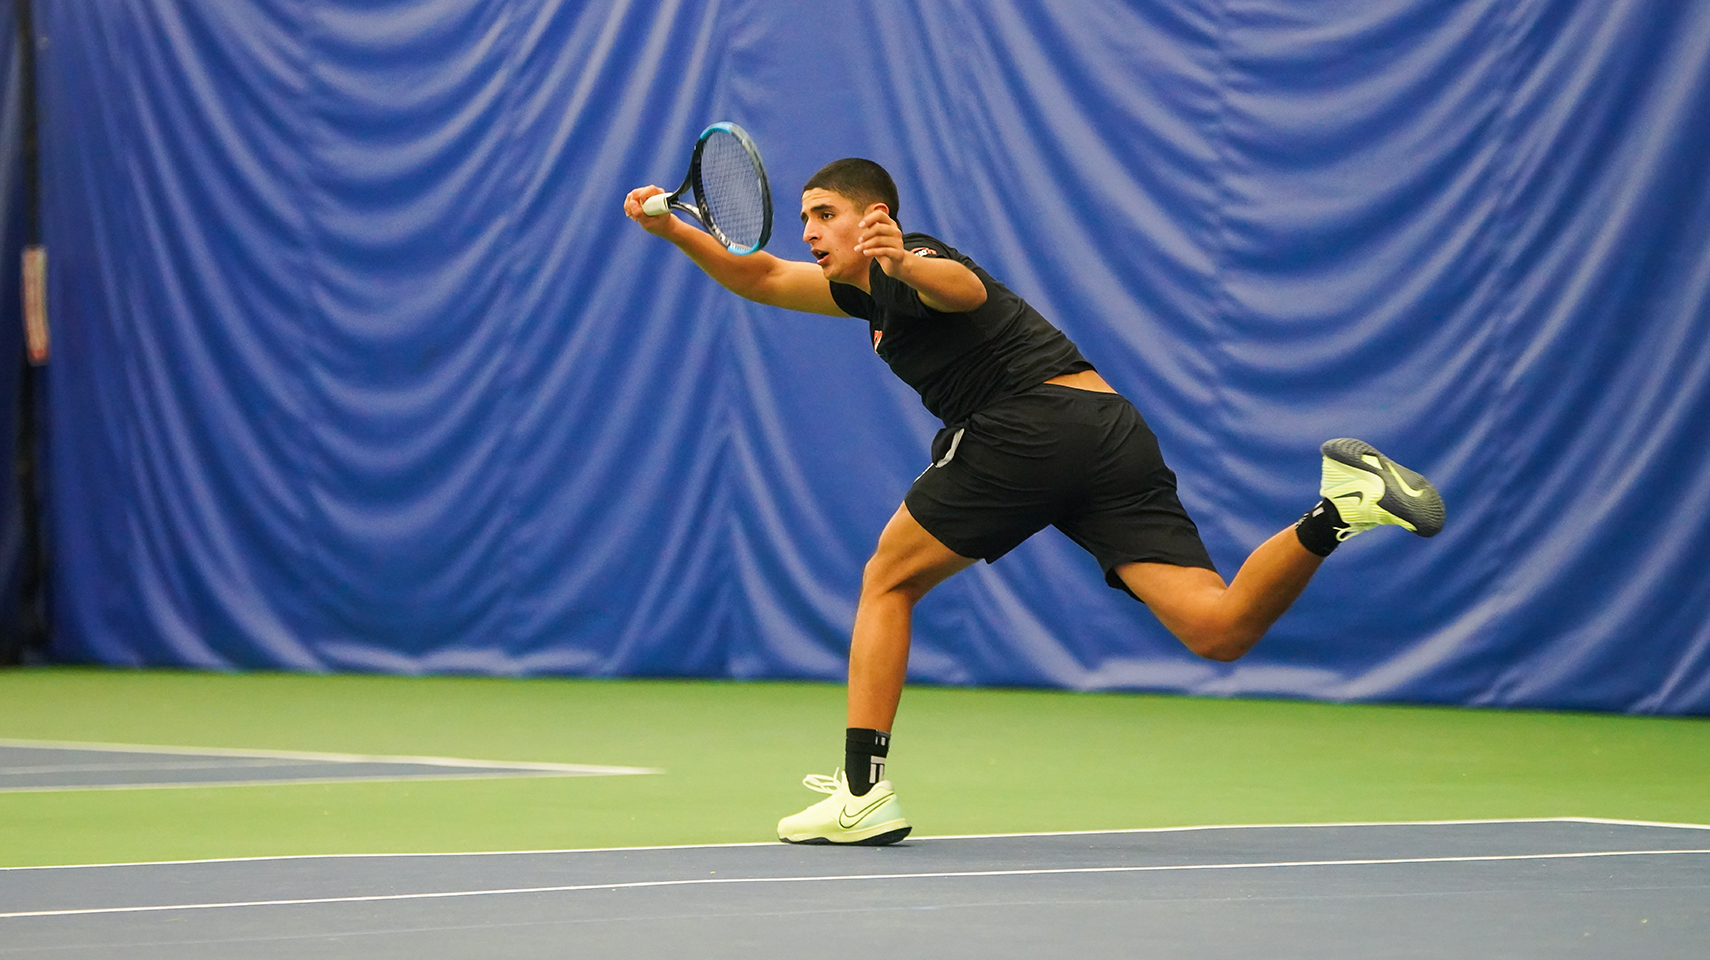 Men's tennis player reaching for a ball